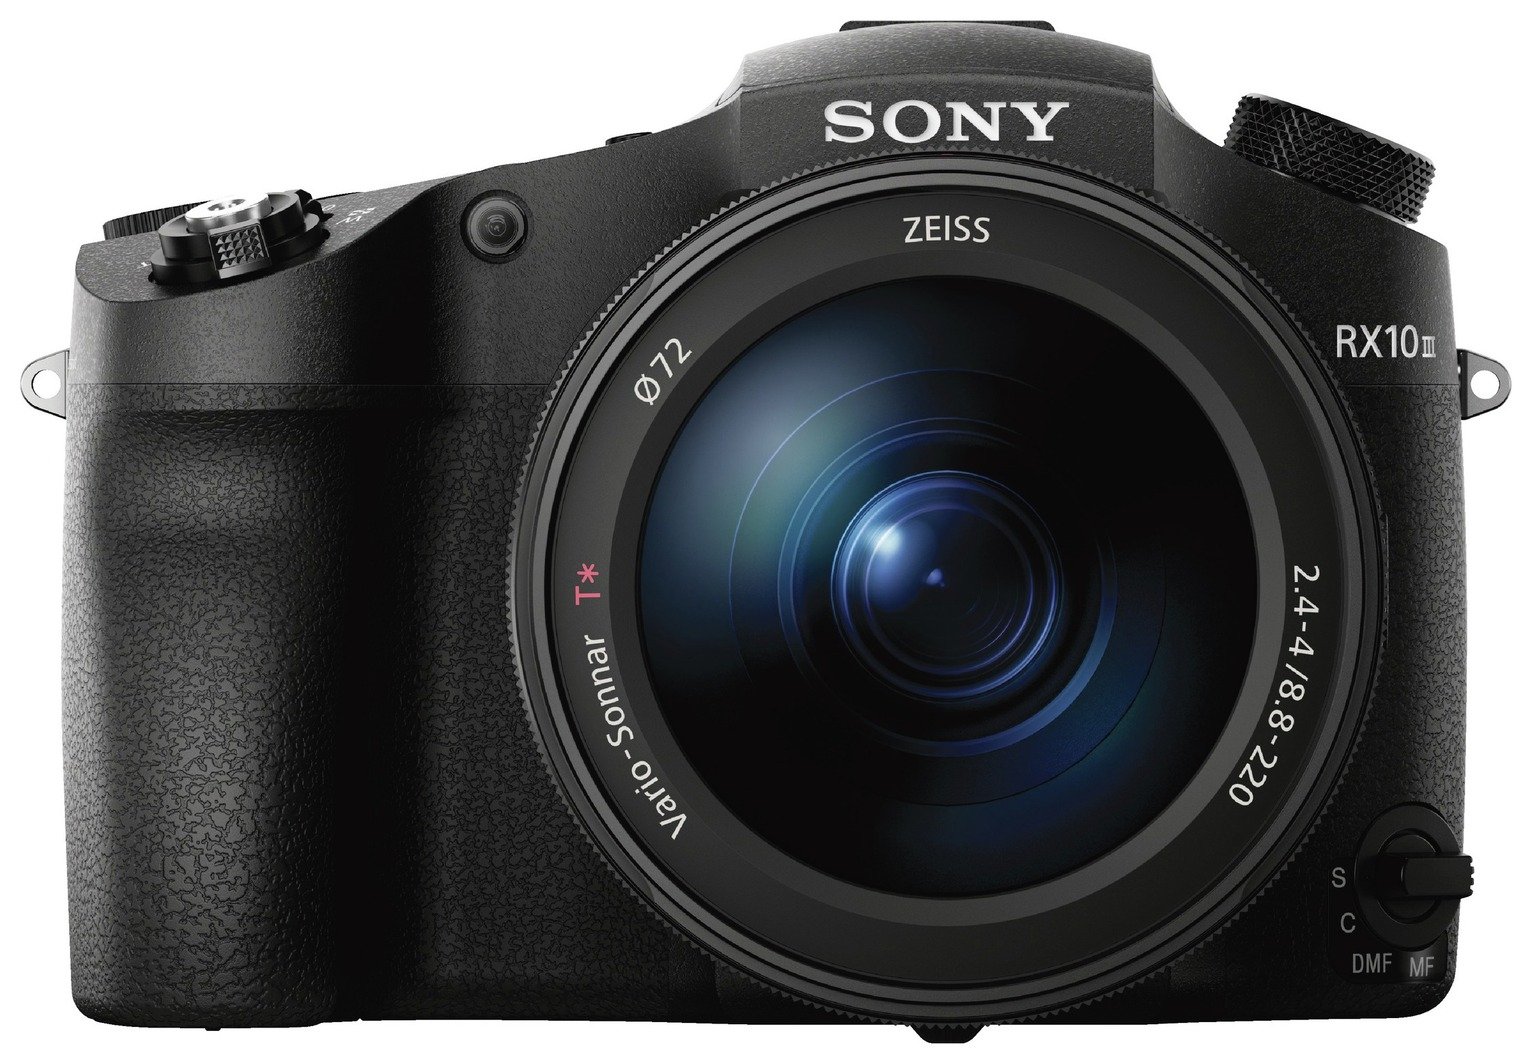 Sony DSC-RX10 III 20.1 MP 25x Zoom Bridge Camera Review